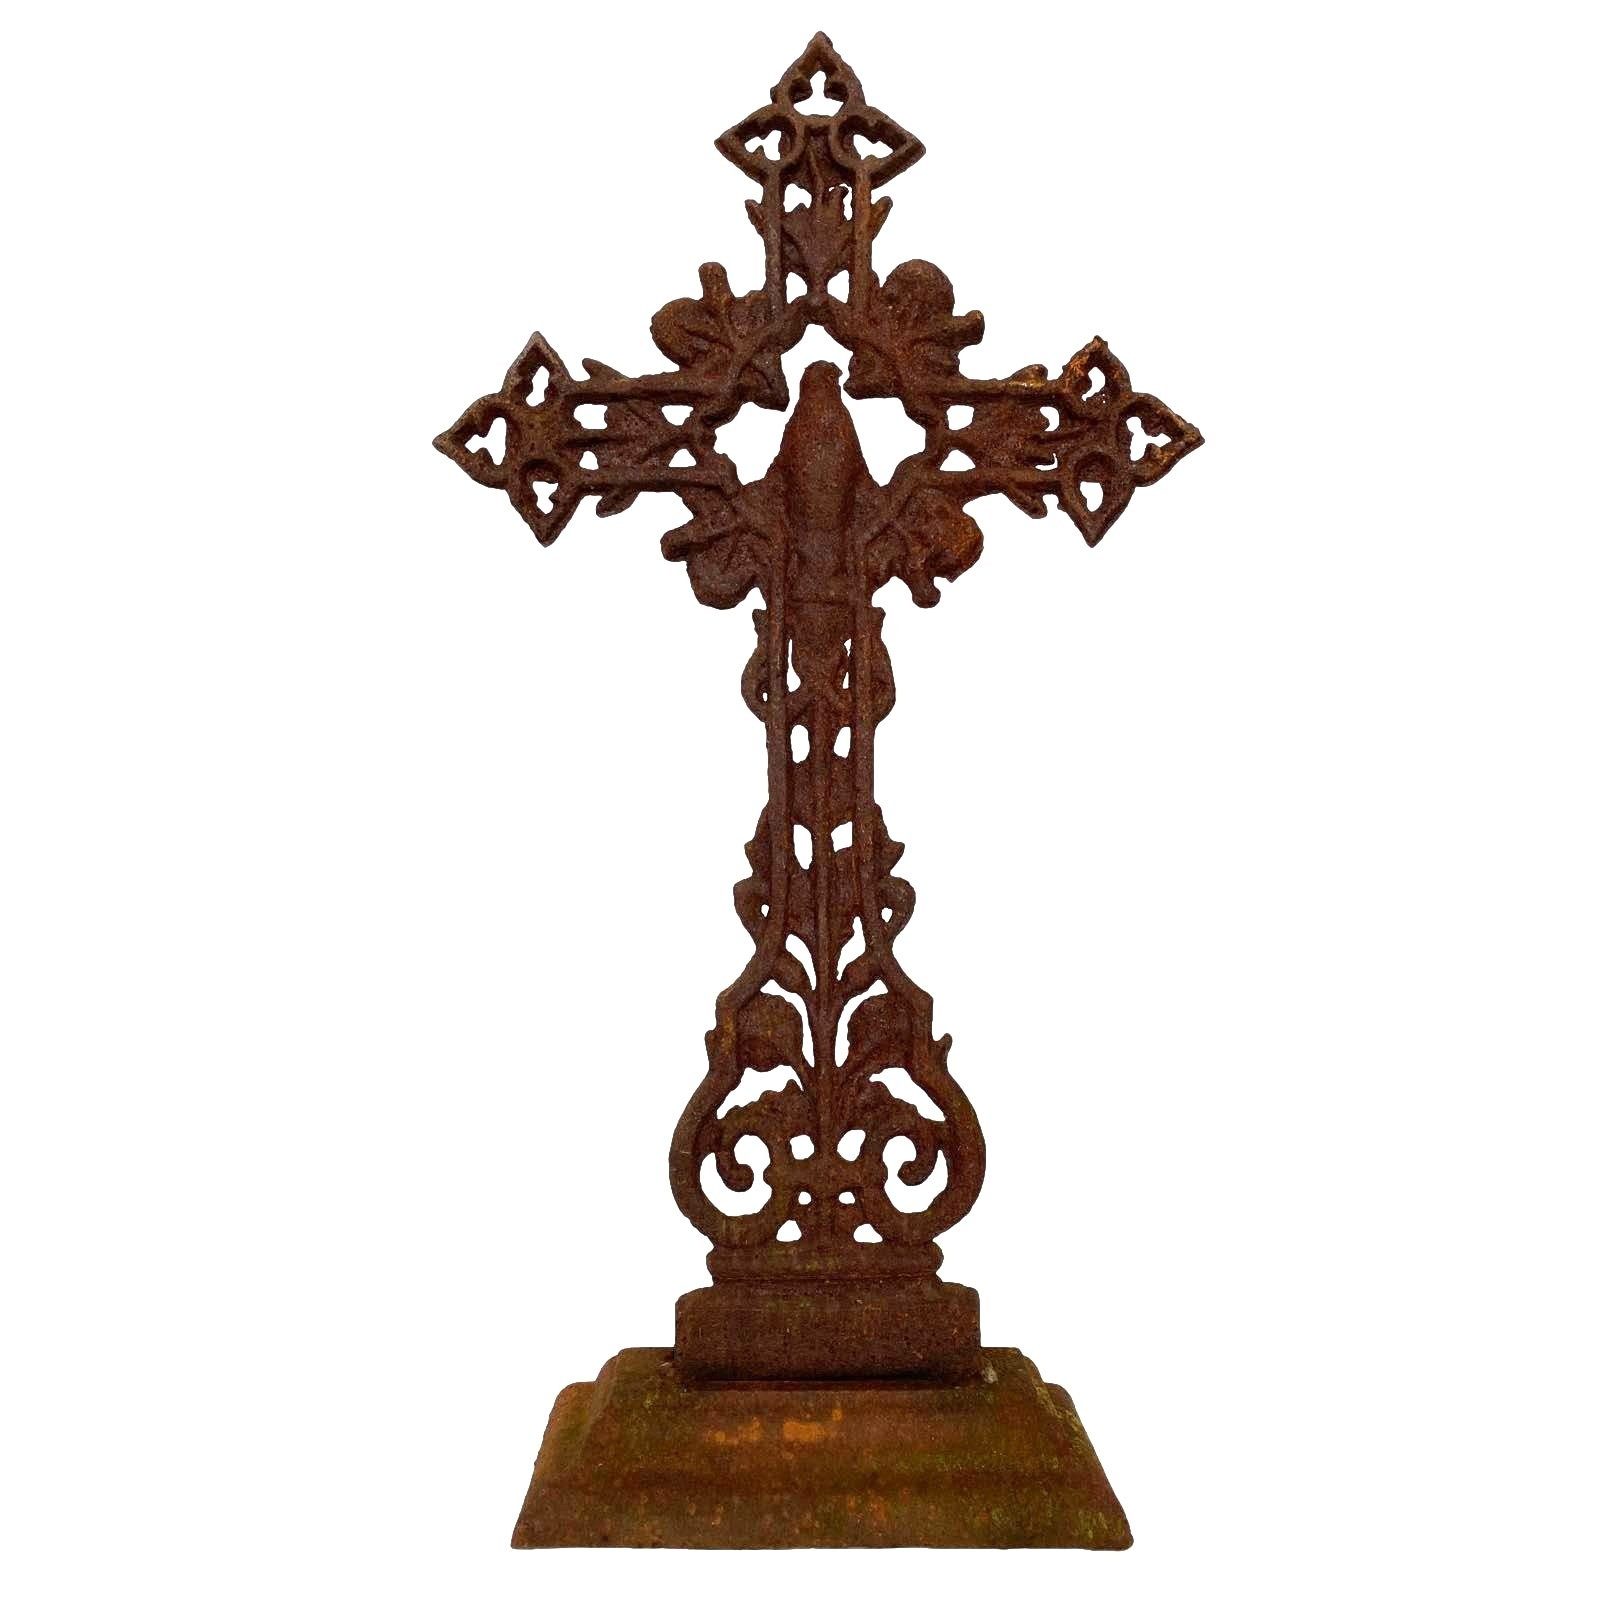 Aubaho Gartenfigur Kreuz Standkreuz Kruzifix Altar 64cm A Rost Glaubenskreuz Eisen Kirche